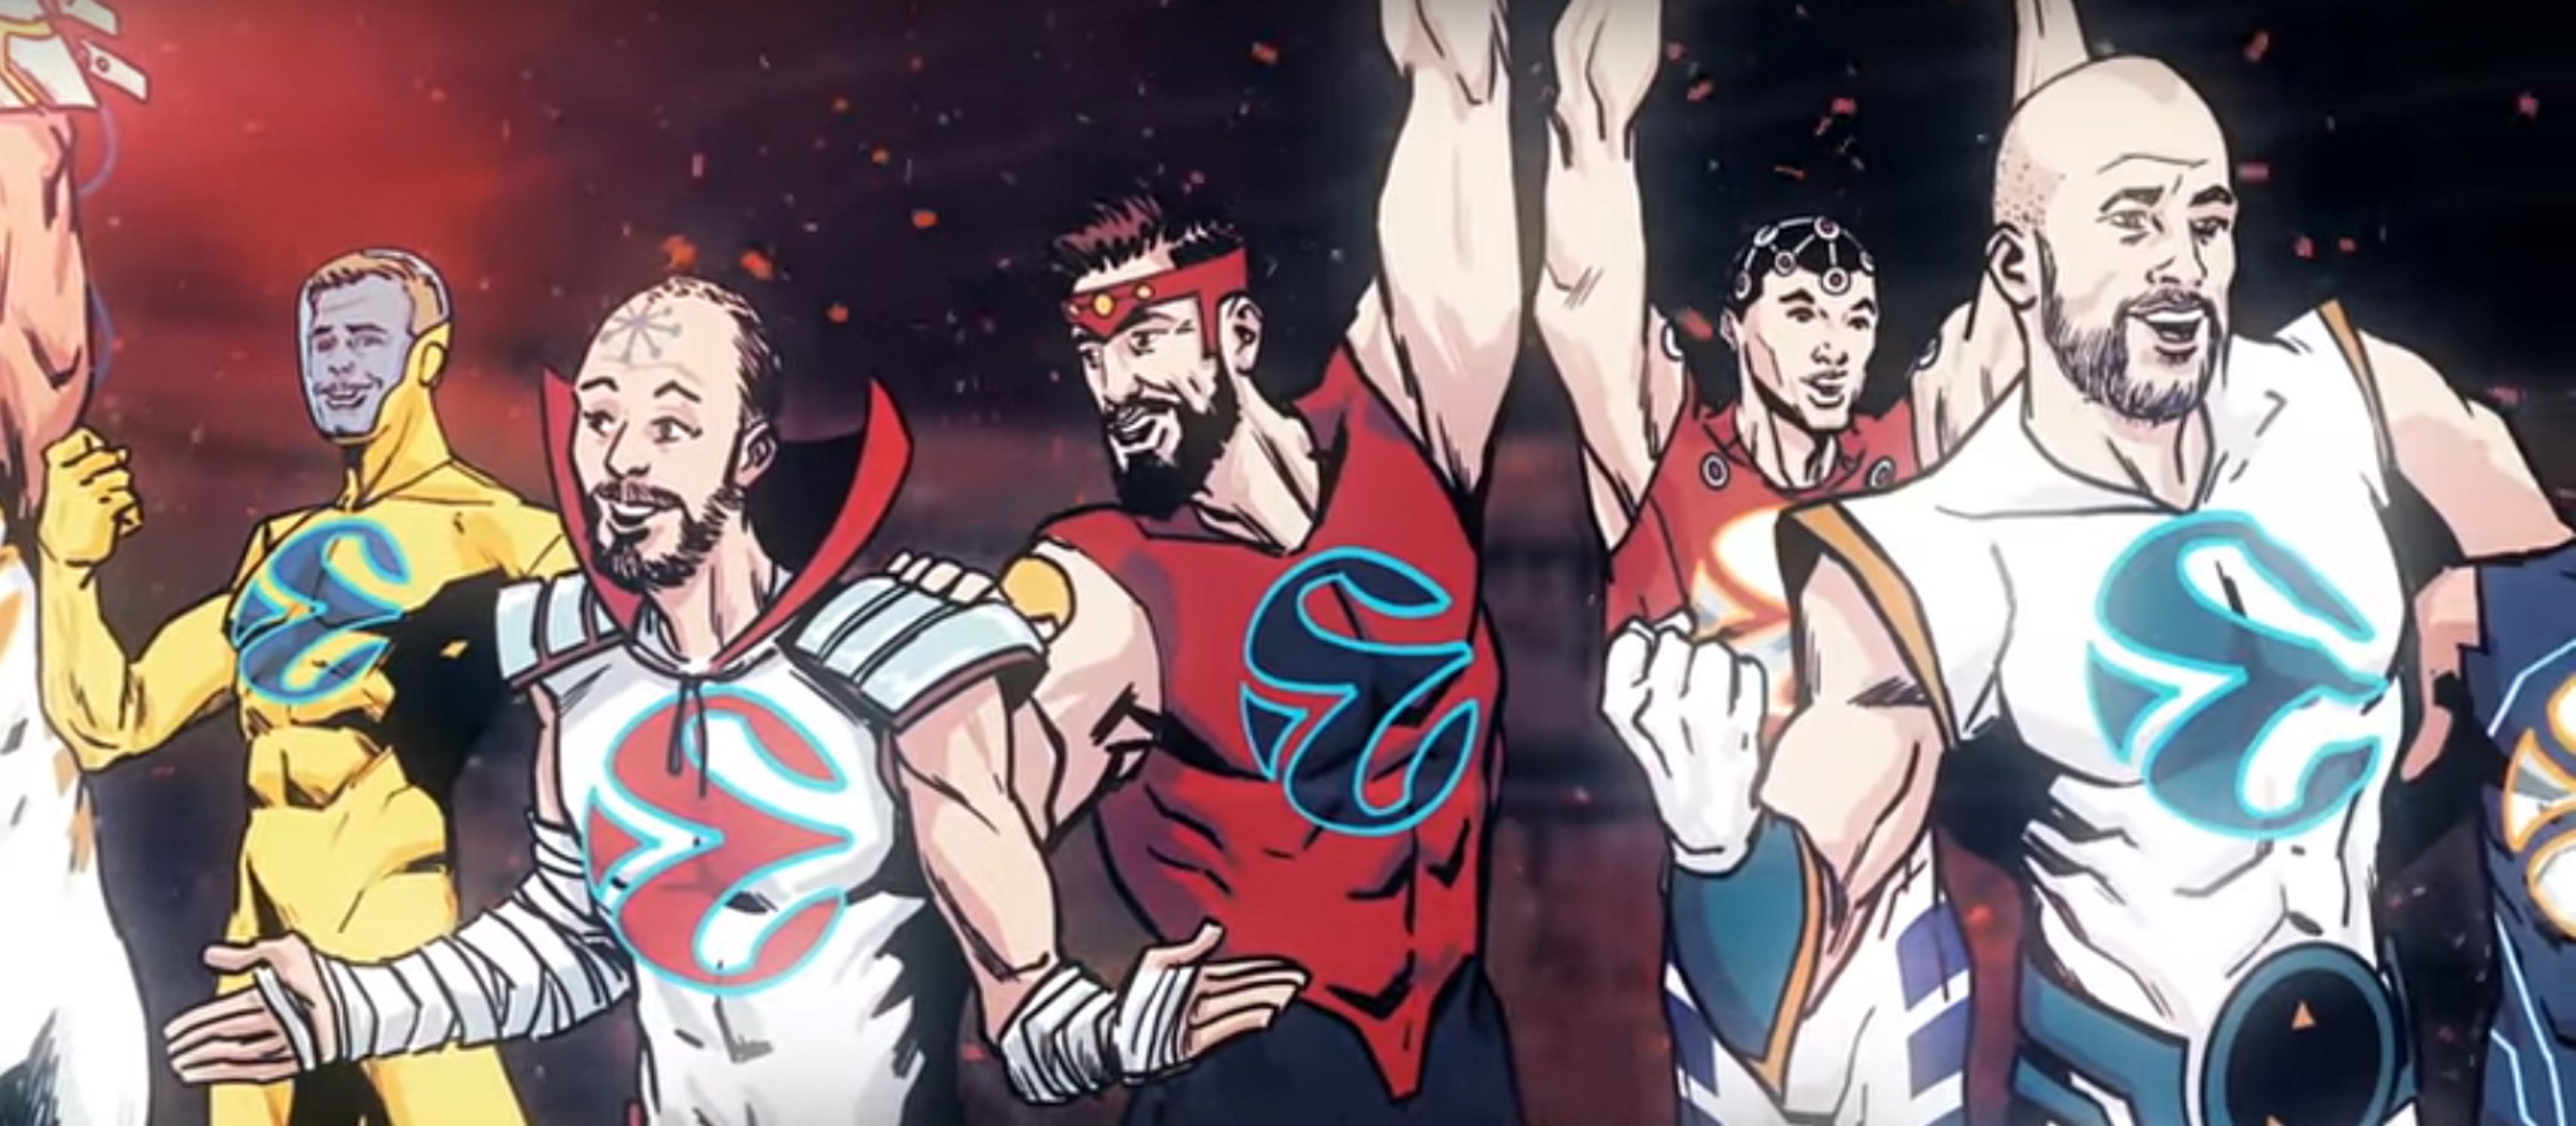 Euroleague: Σπανούλης και Καλάθης σώζουν τον κόσμο με τις… υπερδυνάμεις τους! (video)